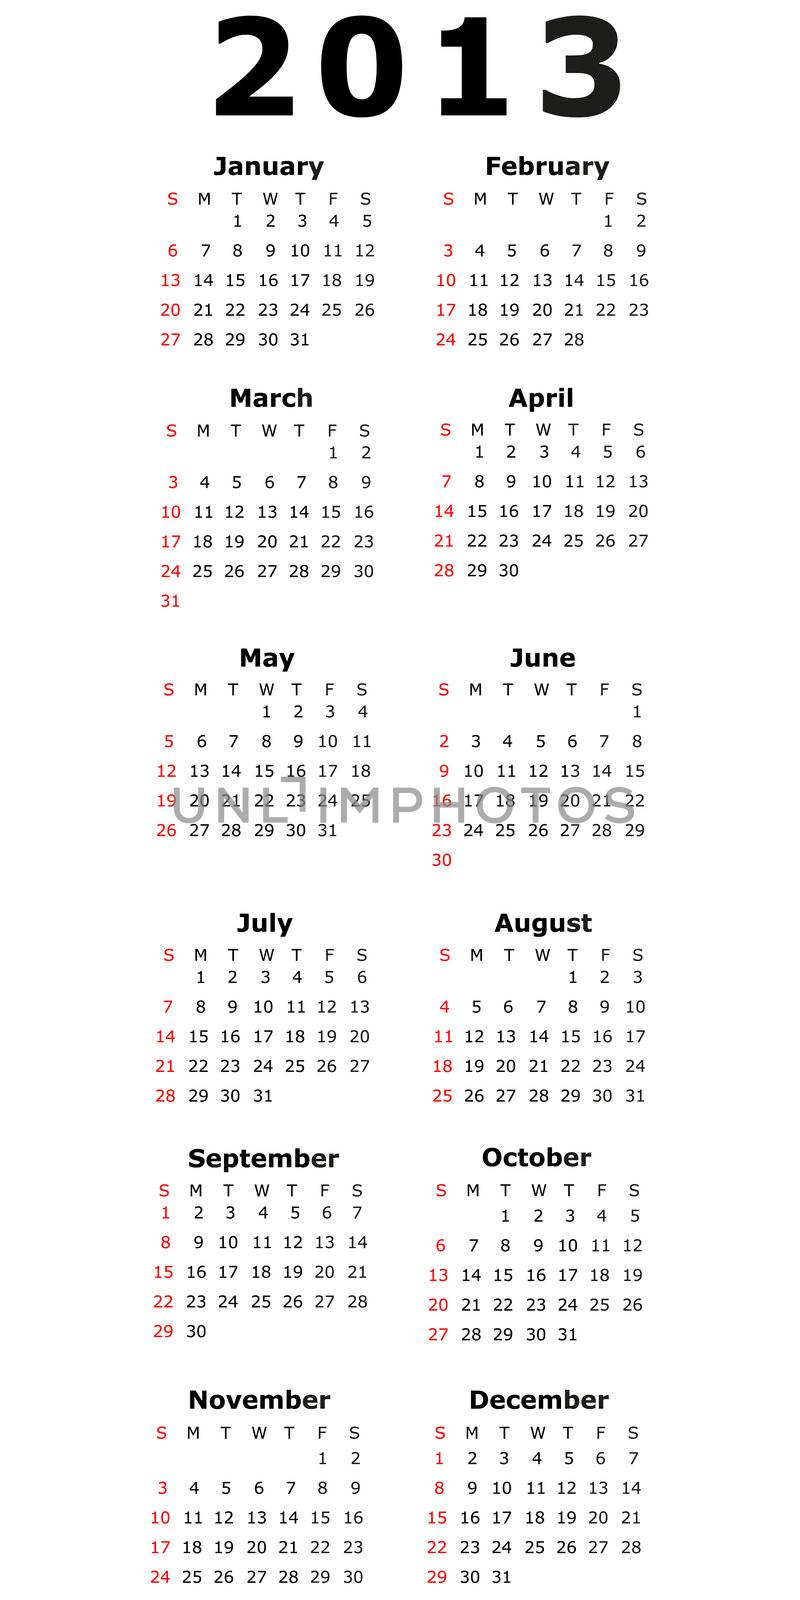 An Illustration of a Simple Calendar - 2013 by DragonEyeMedia